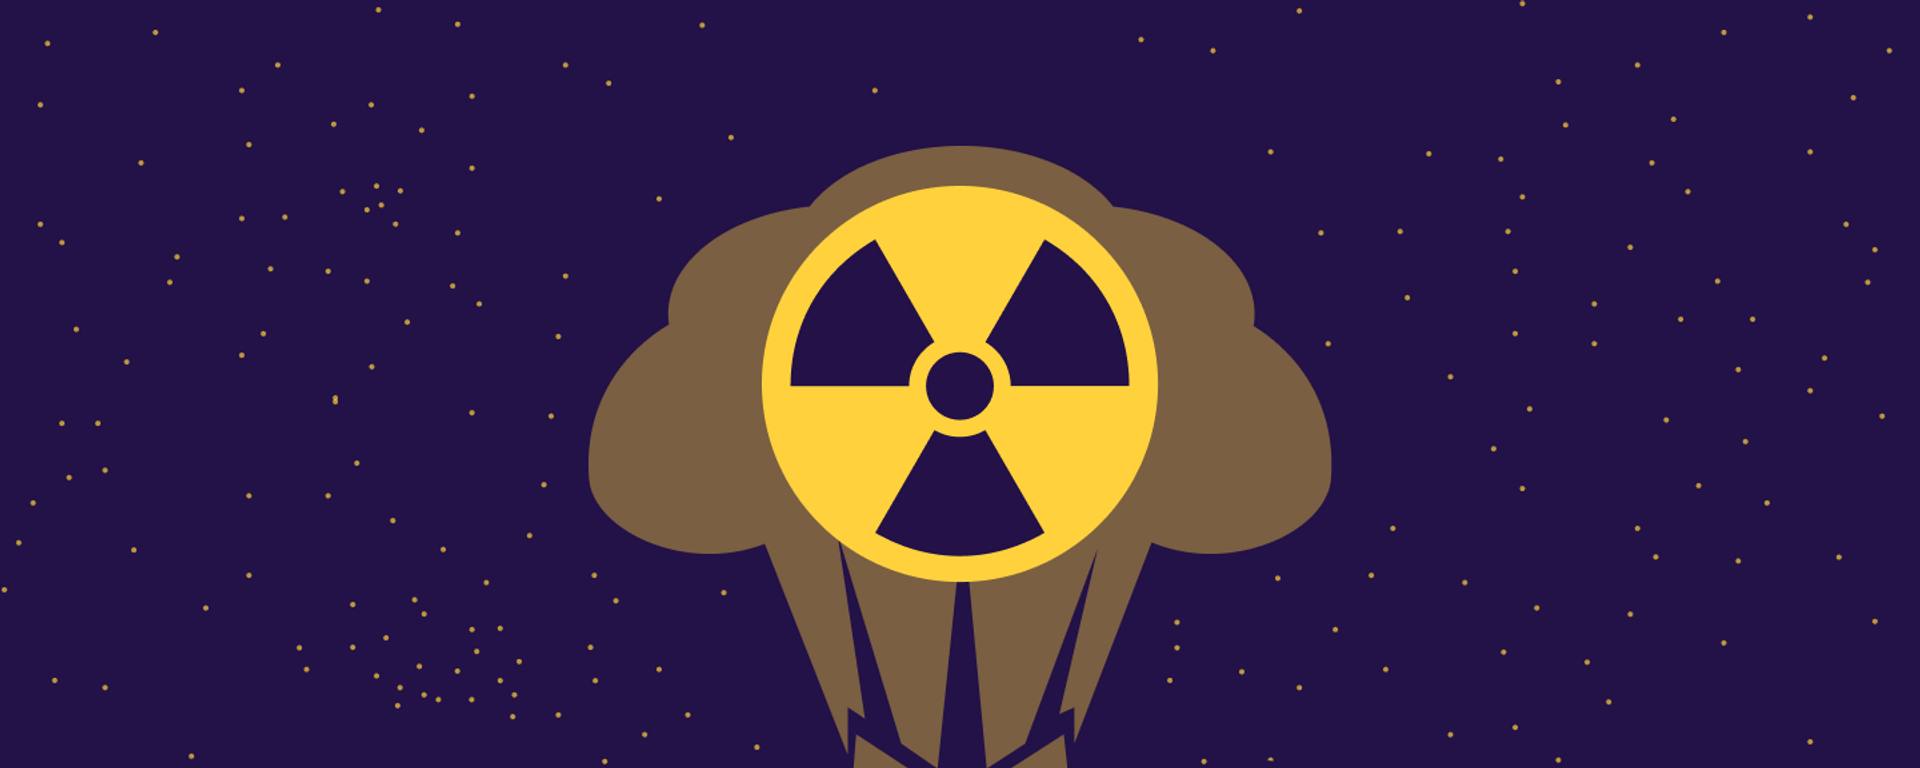 Bomba nuclear - Sputnik Mundo, 1920, 01.11.2022